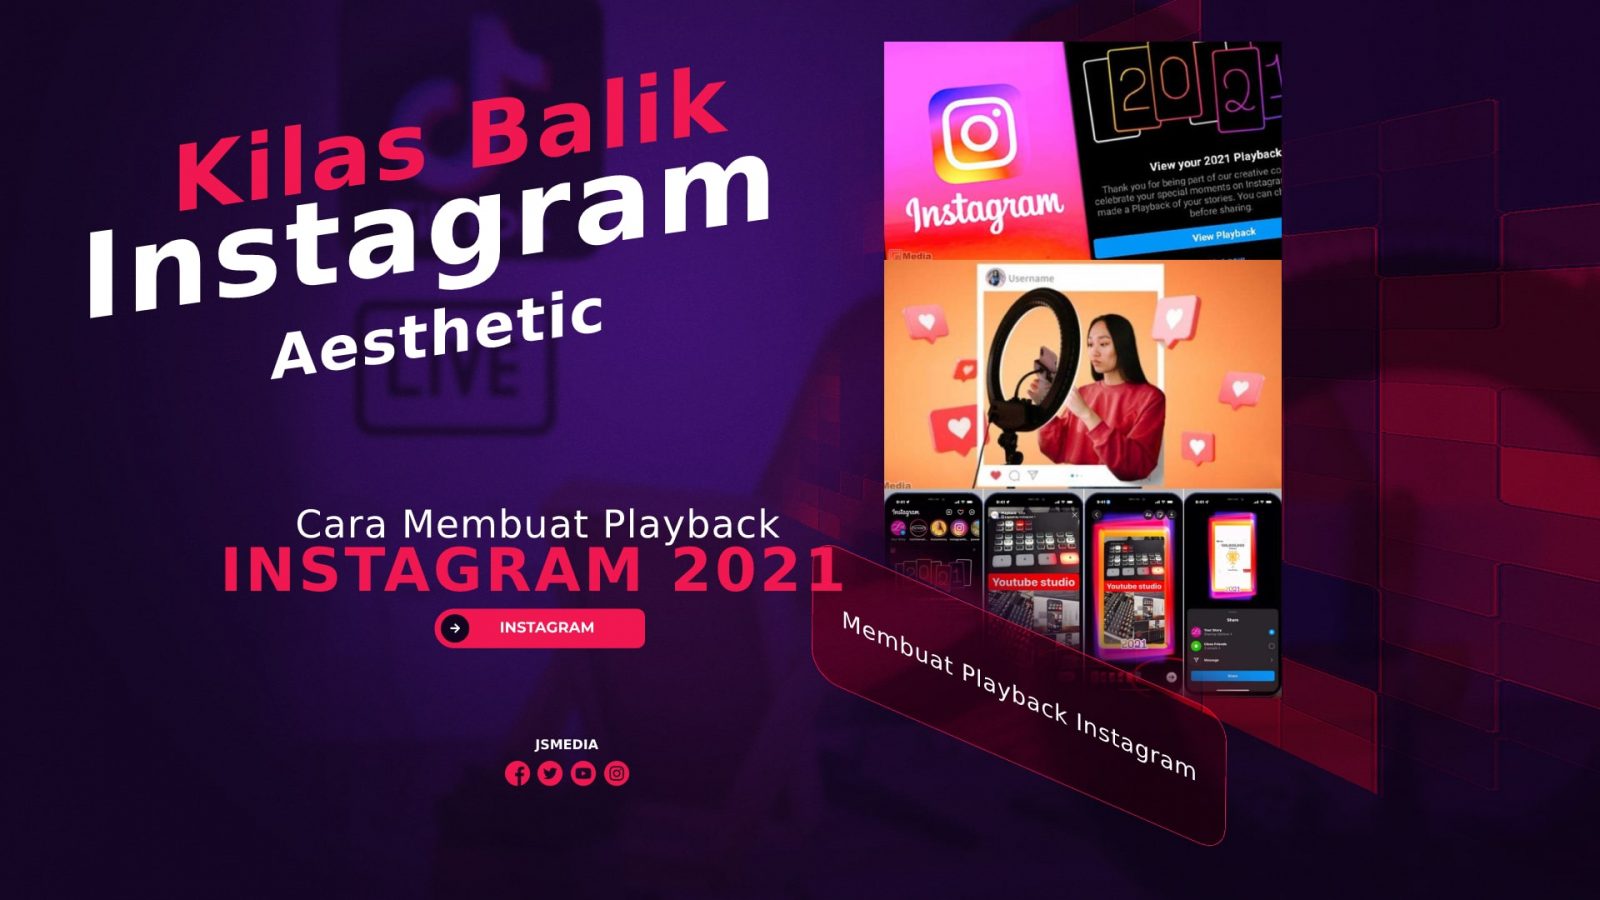 Cara Membuat Playback Instagram 2021, Kilas Balik IG